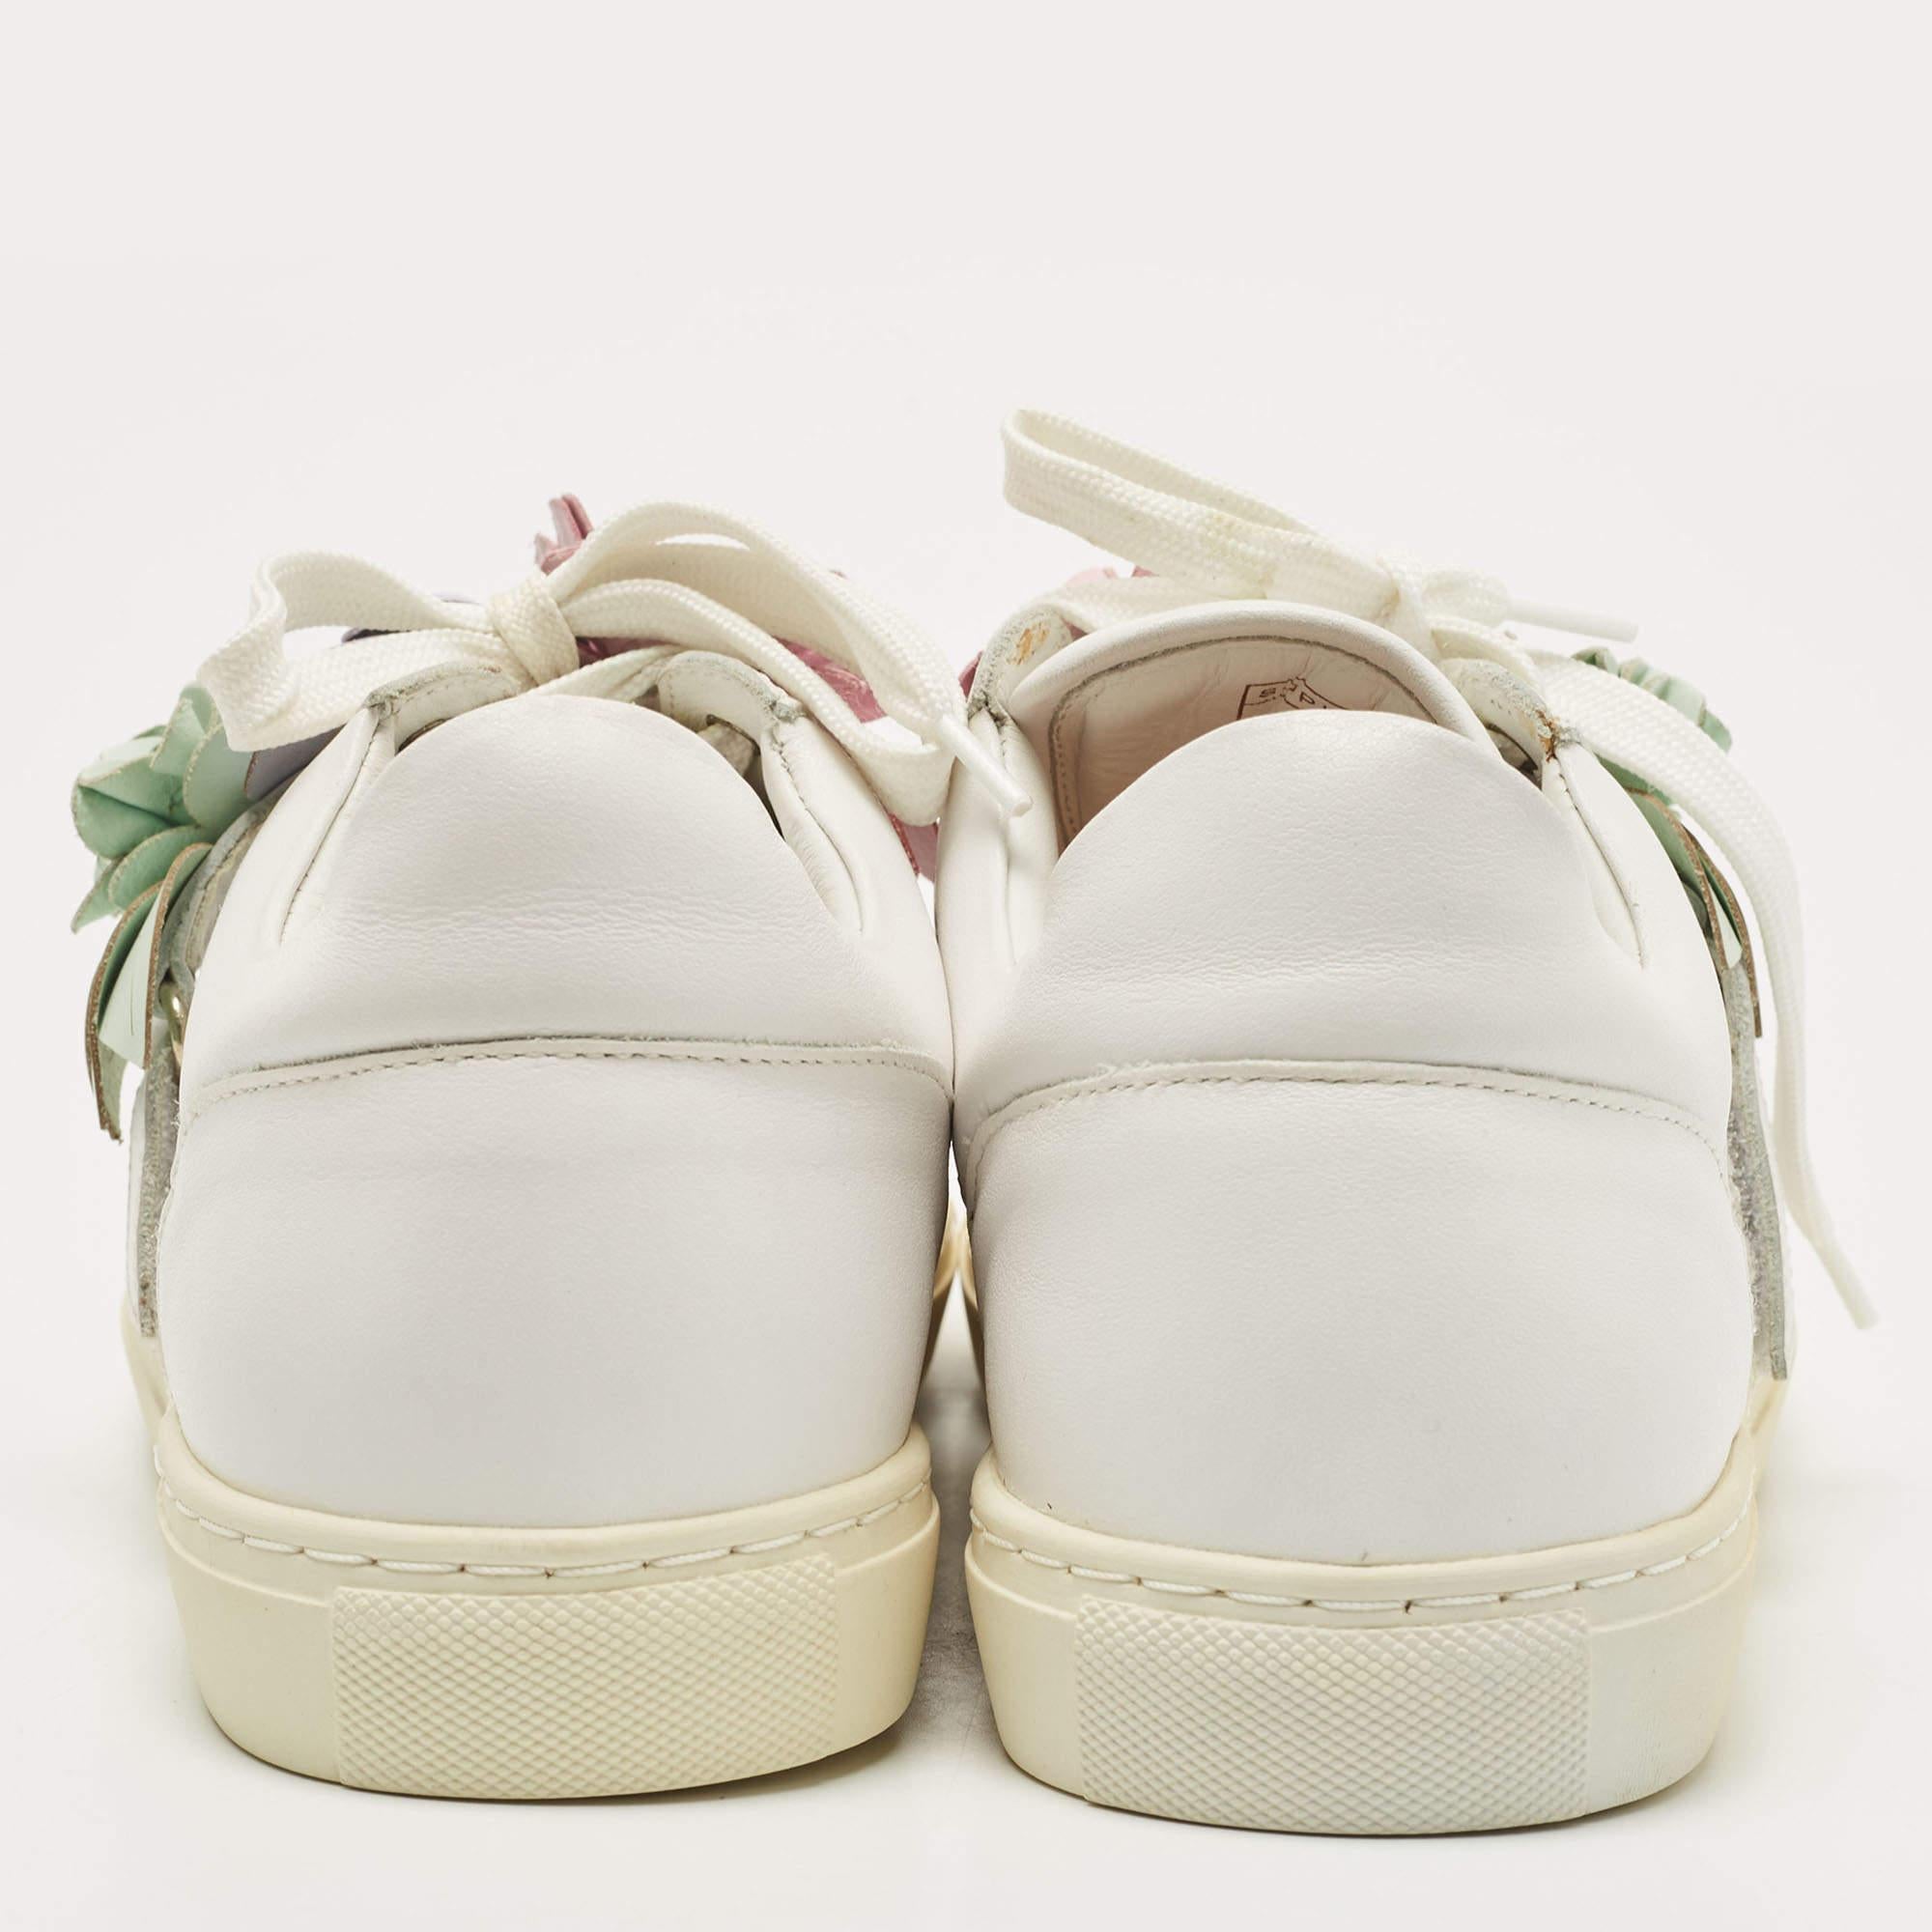 Women's Sophia Webster White Leather Lilico Flower Low Top Sneakers Size 39